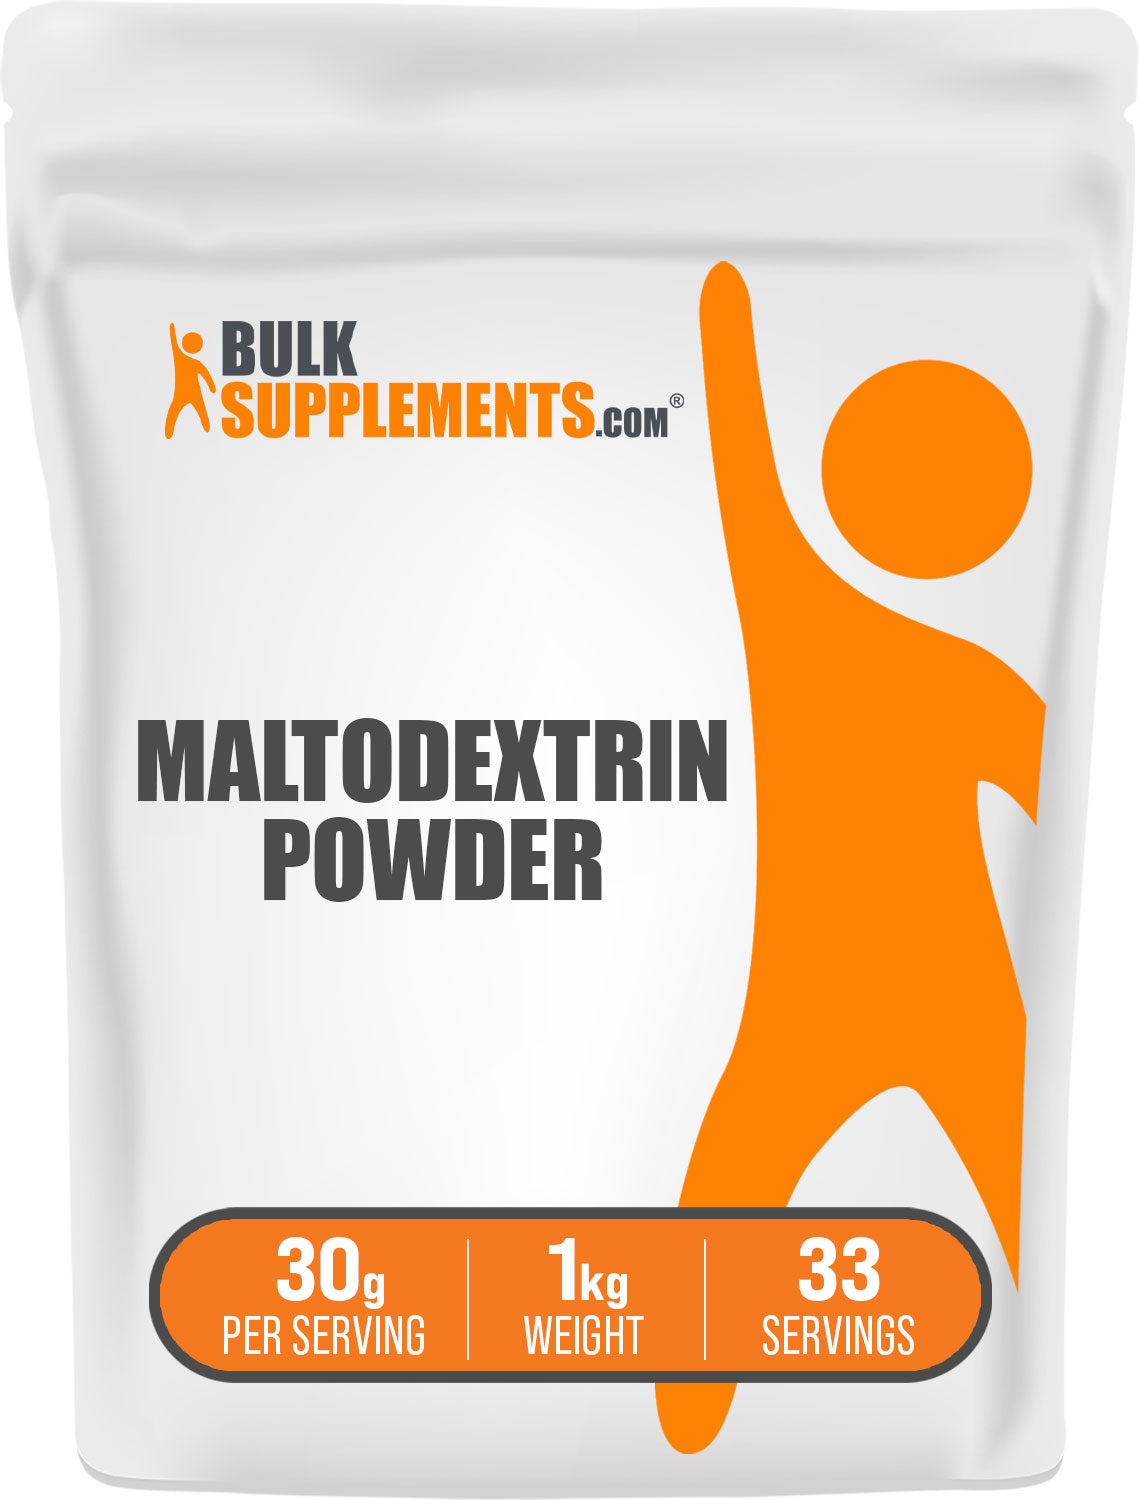 BulkSupplements.com Maltodextrin Powder 1kg bag